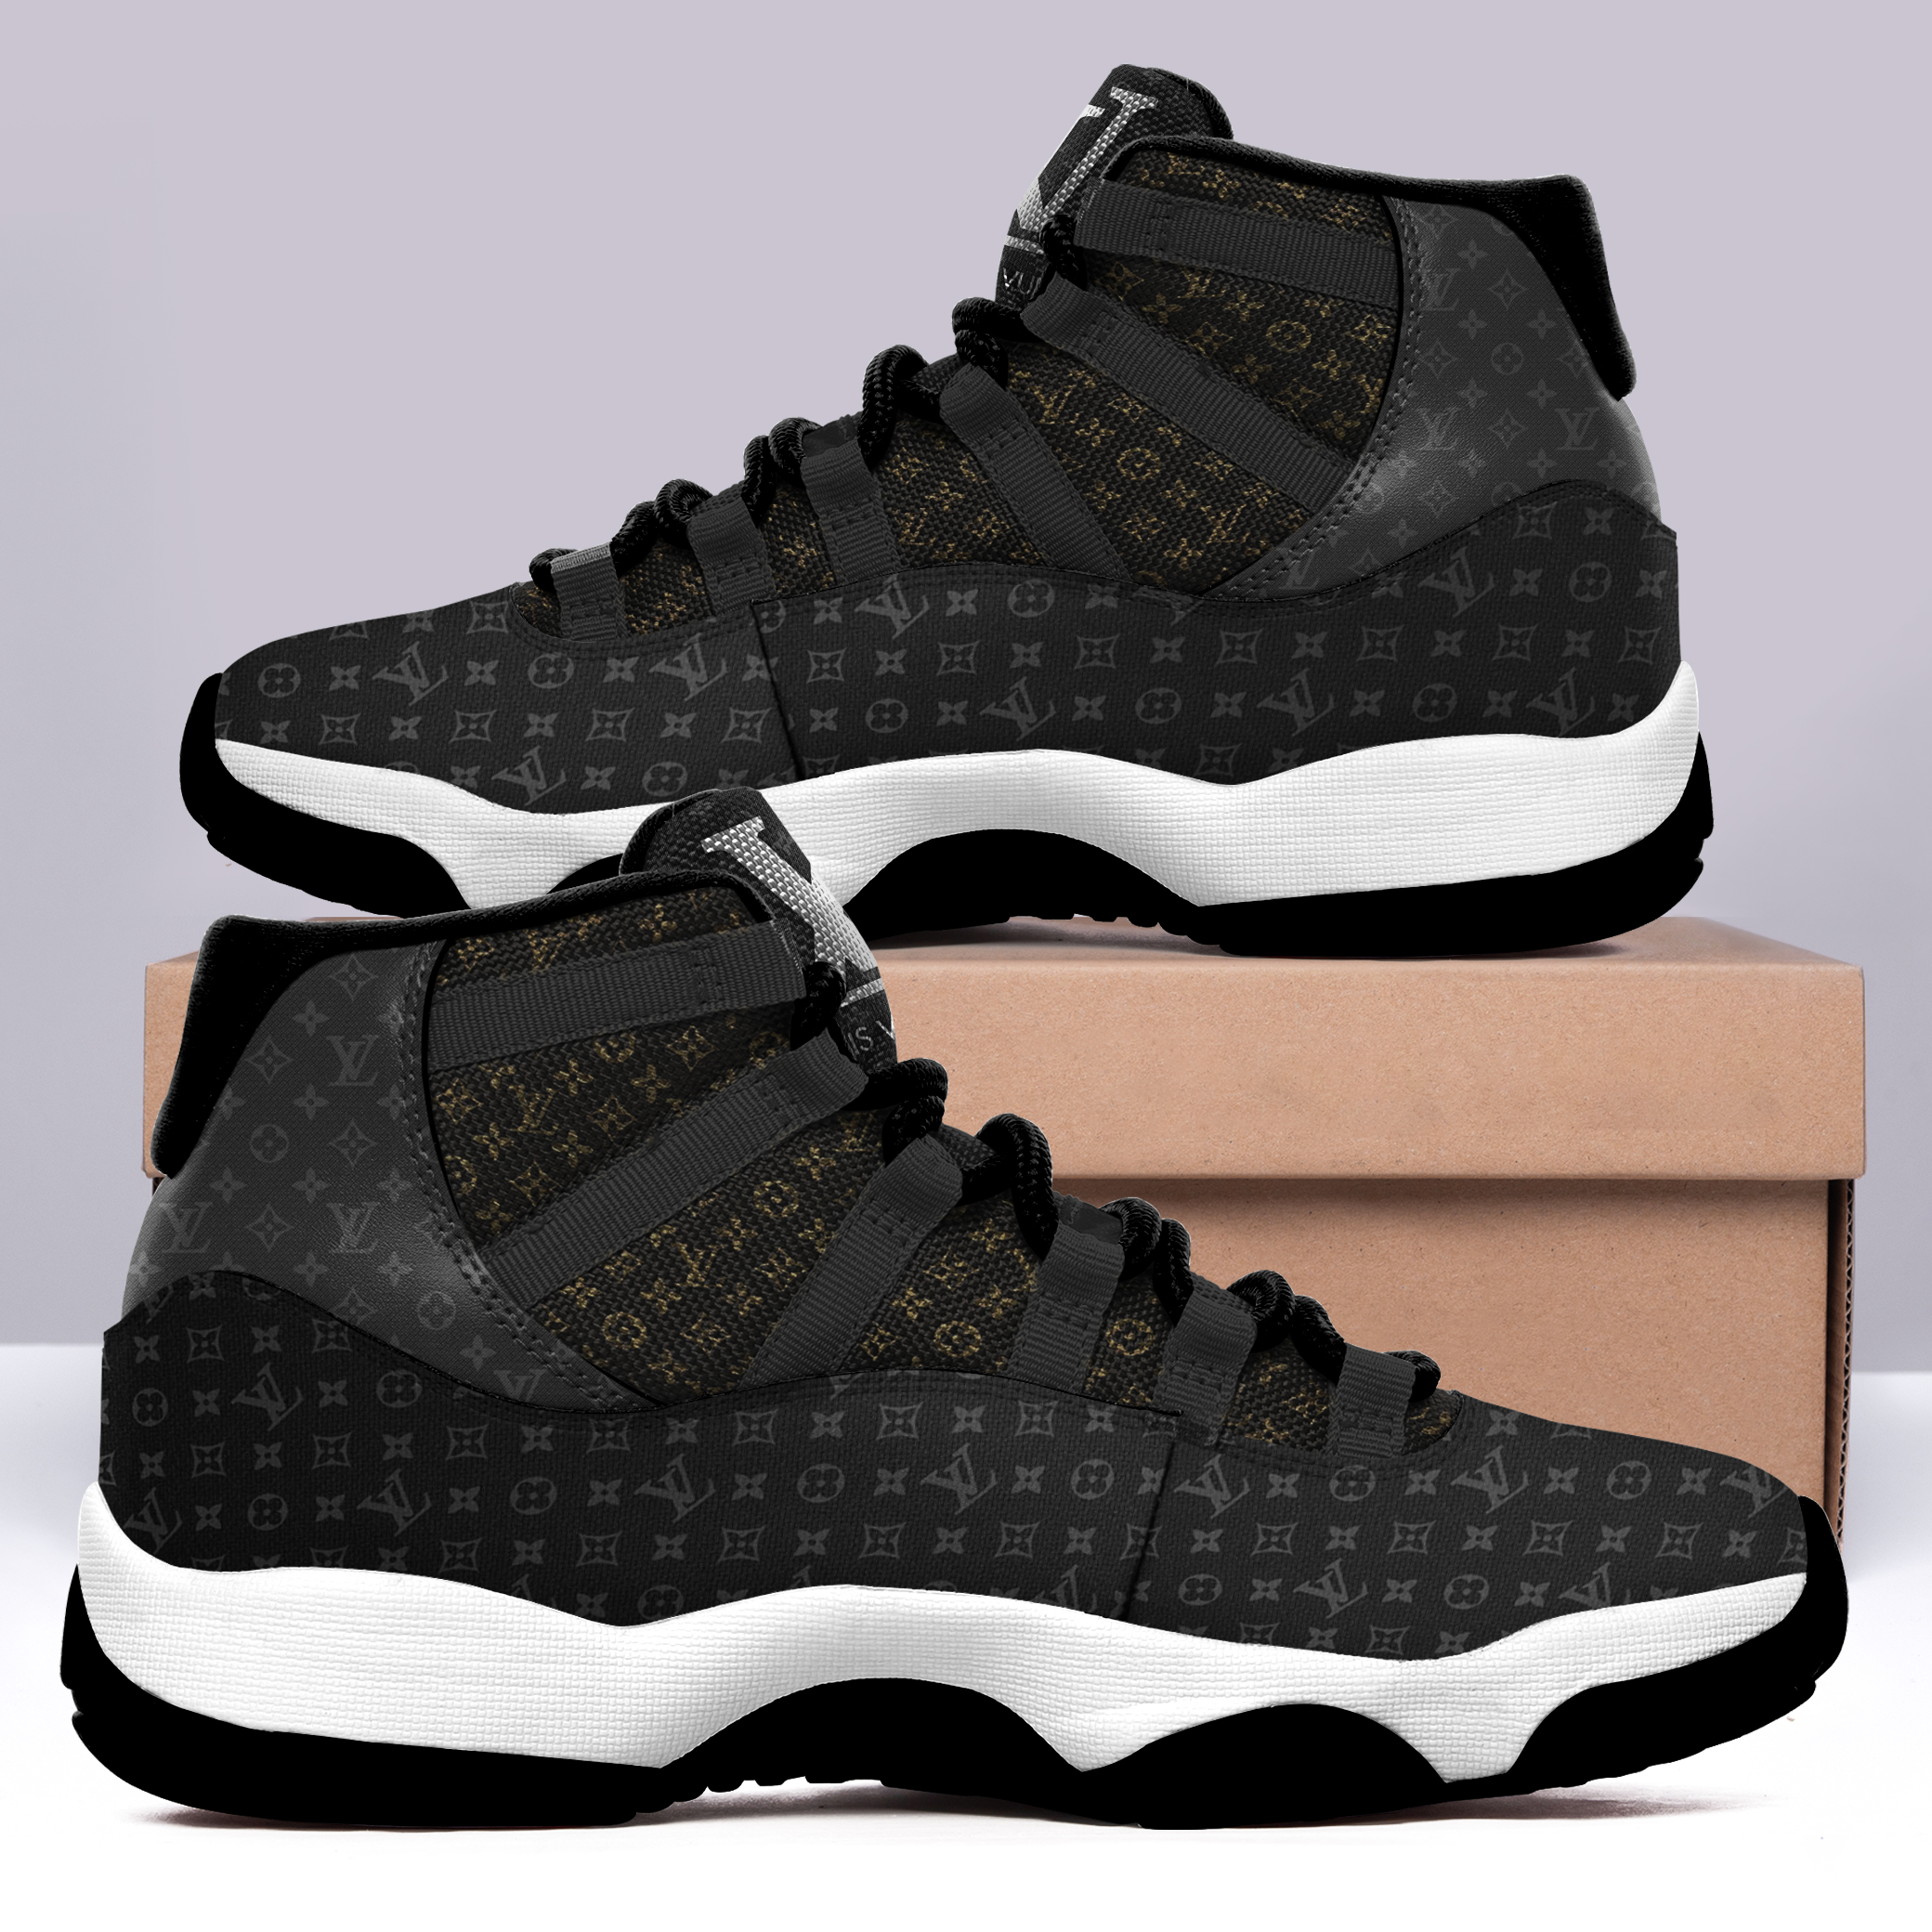 Louis Vuitton Air Jordan 11 Sneakers Shoes Black Monogram Hot 2022 LV Gifts For Men Women HT